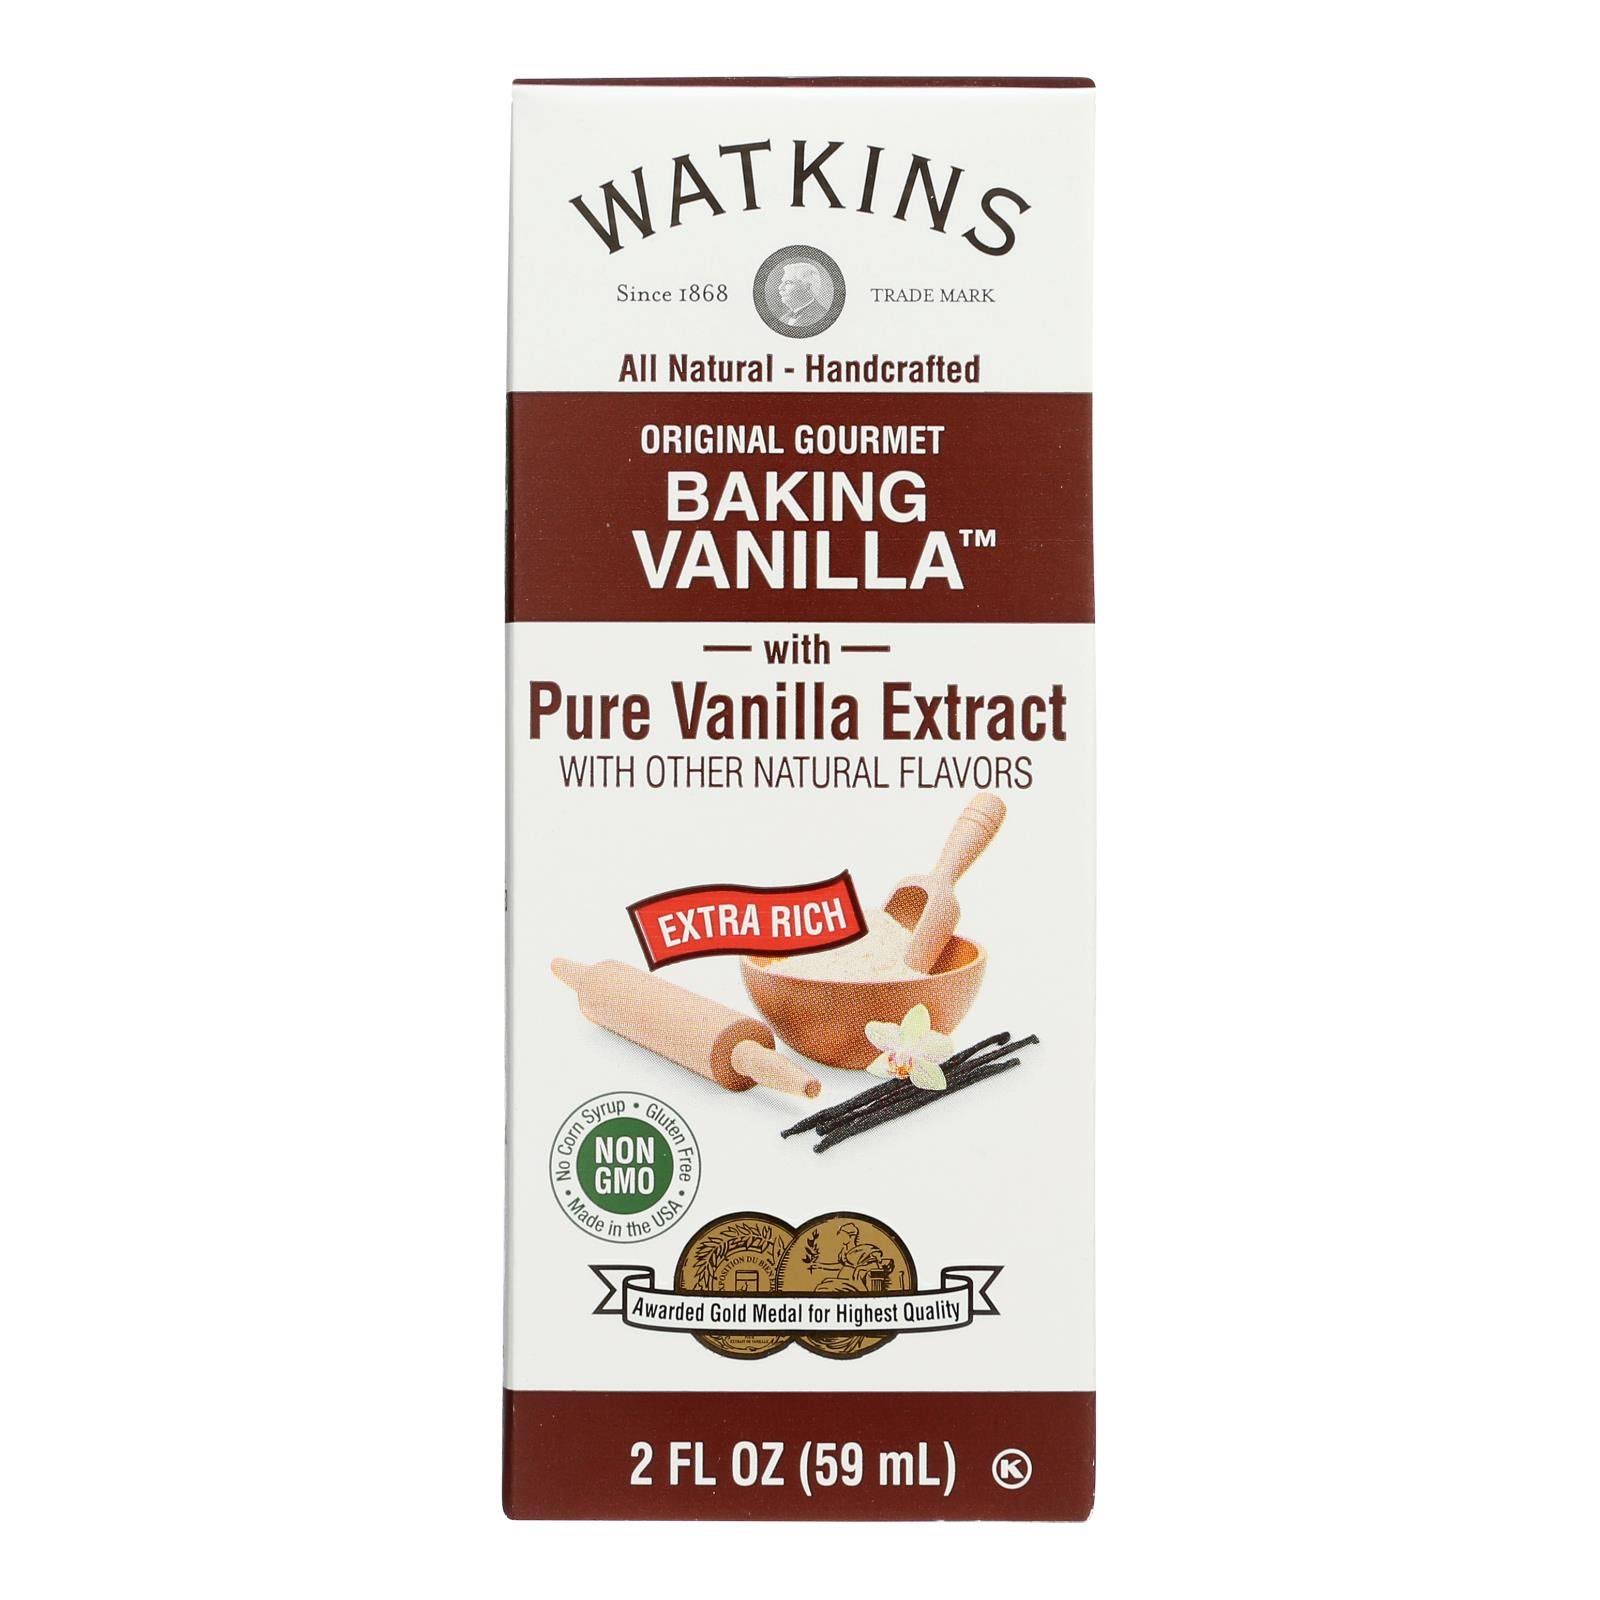 Watkins Baking Vanilla, Original Gourmet - 2 fl oz